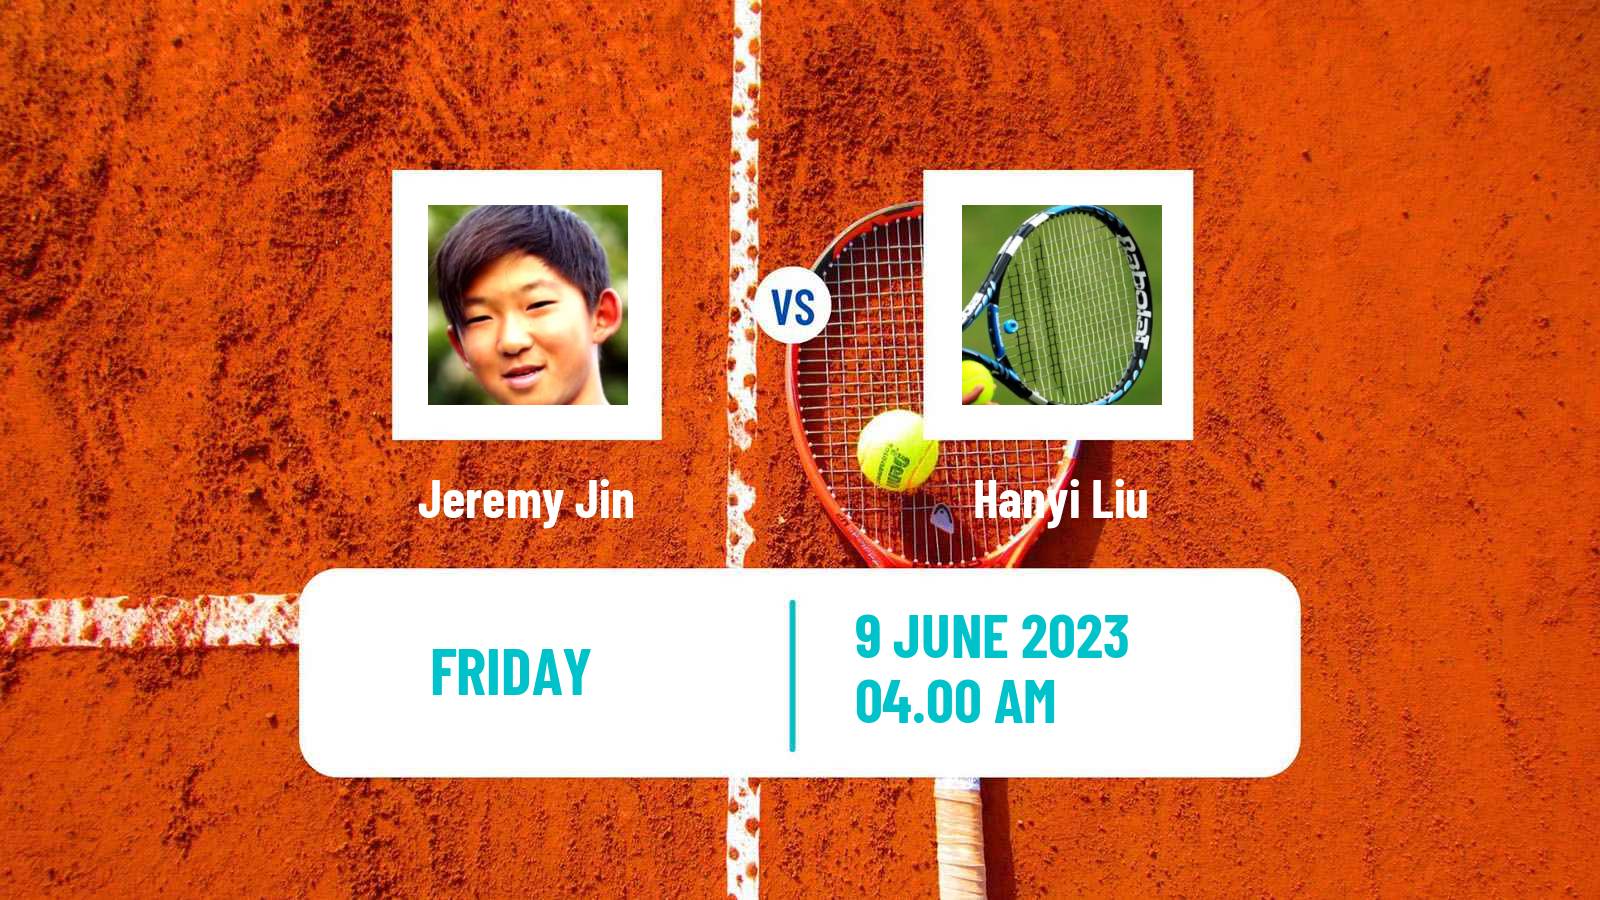 Tennis ITF M25 Luzhou Men Jeremy Jin - Hanyi Liu